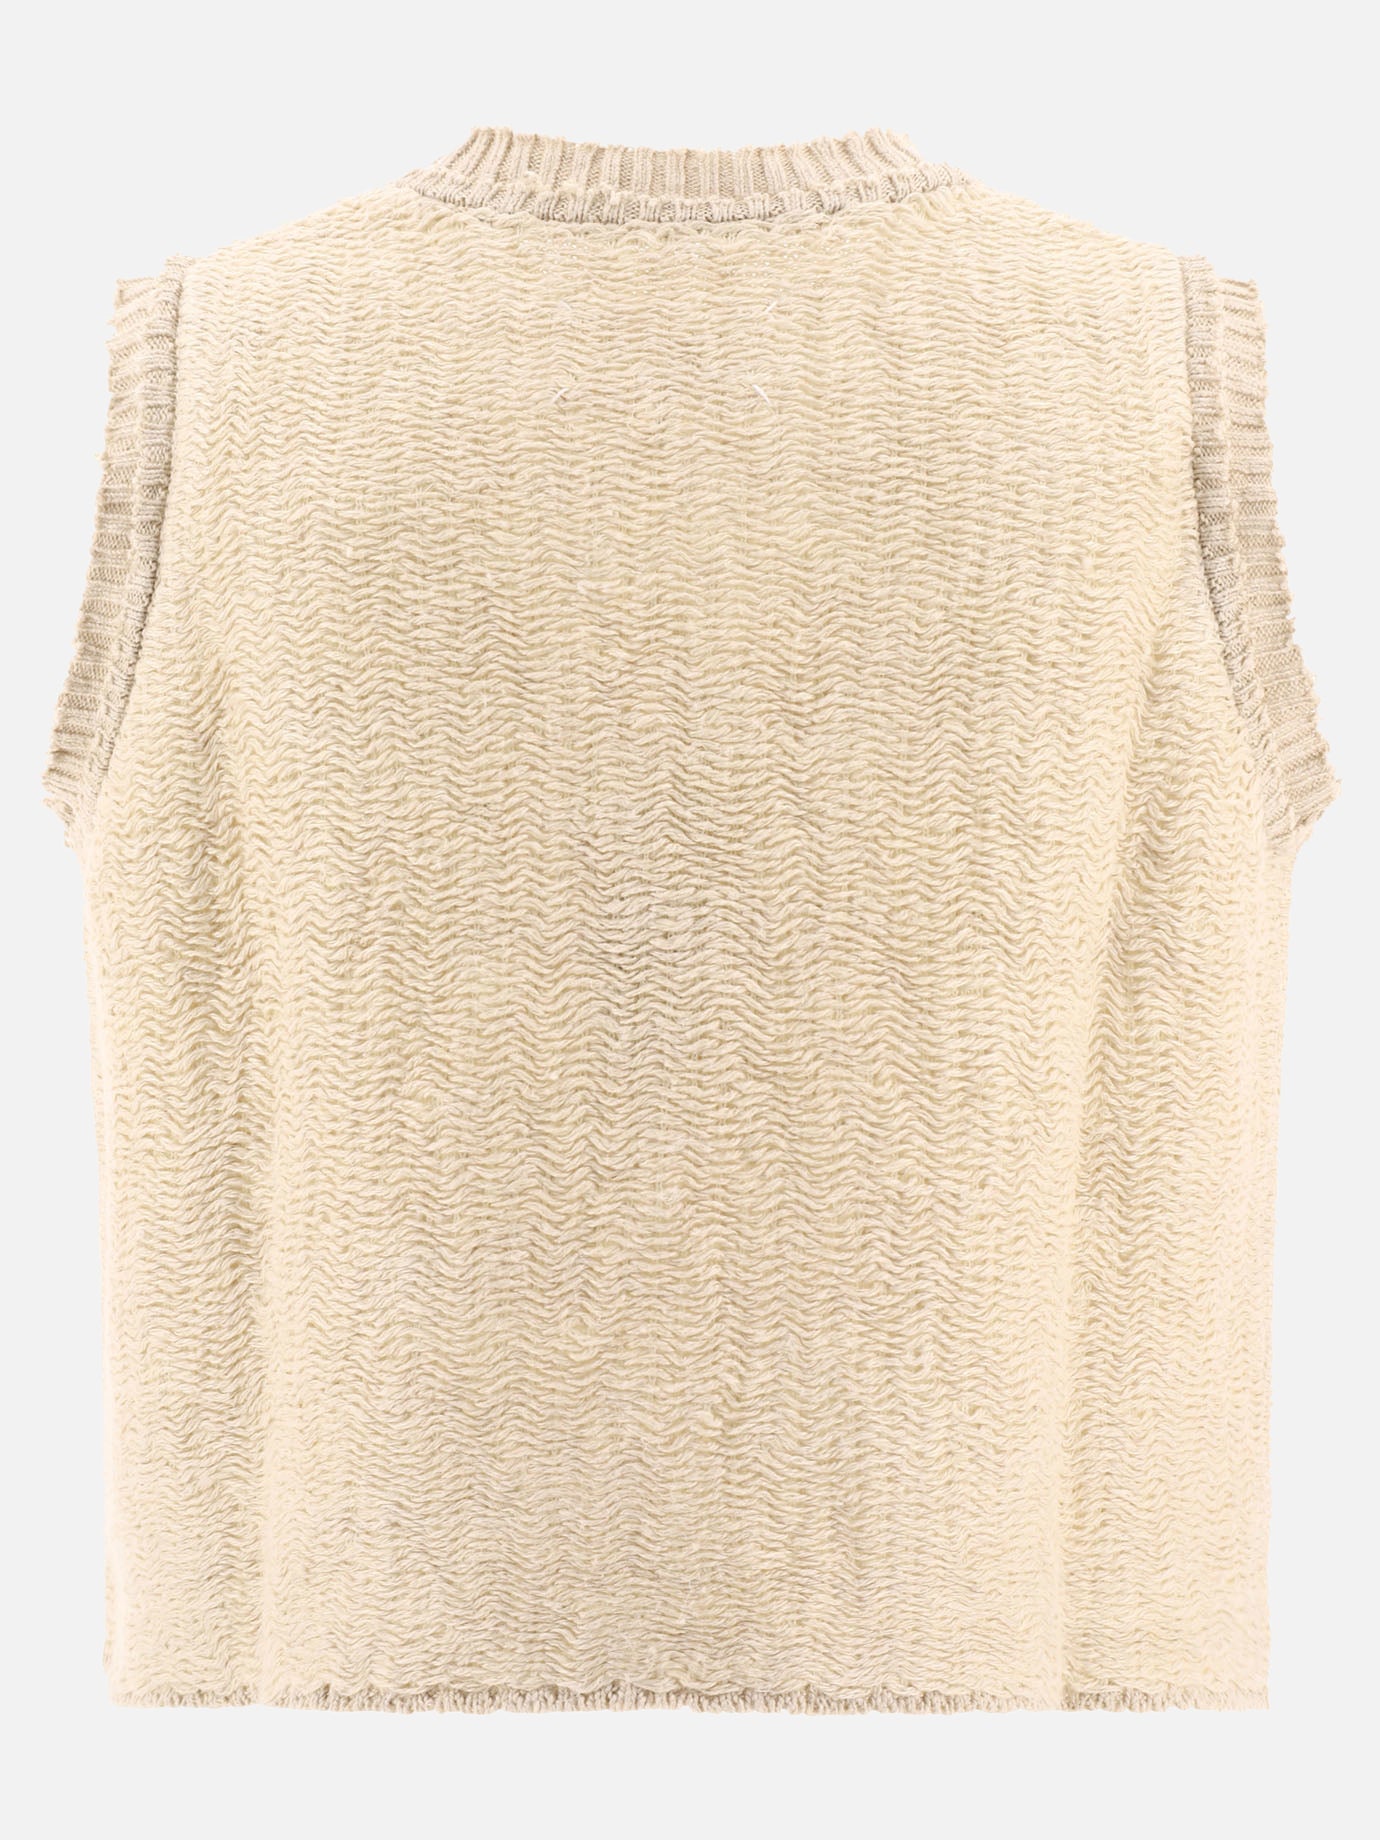 Raw woven knit vest